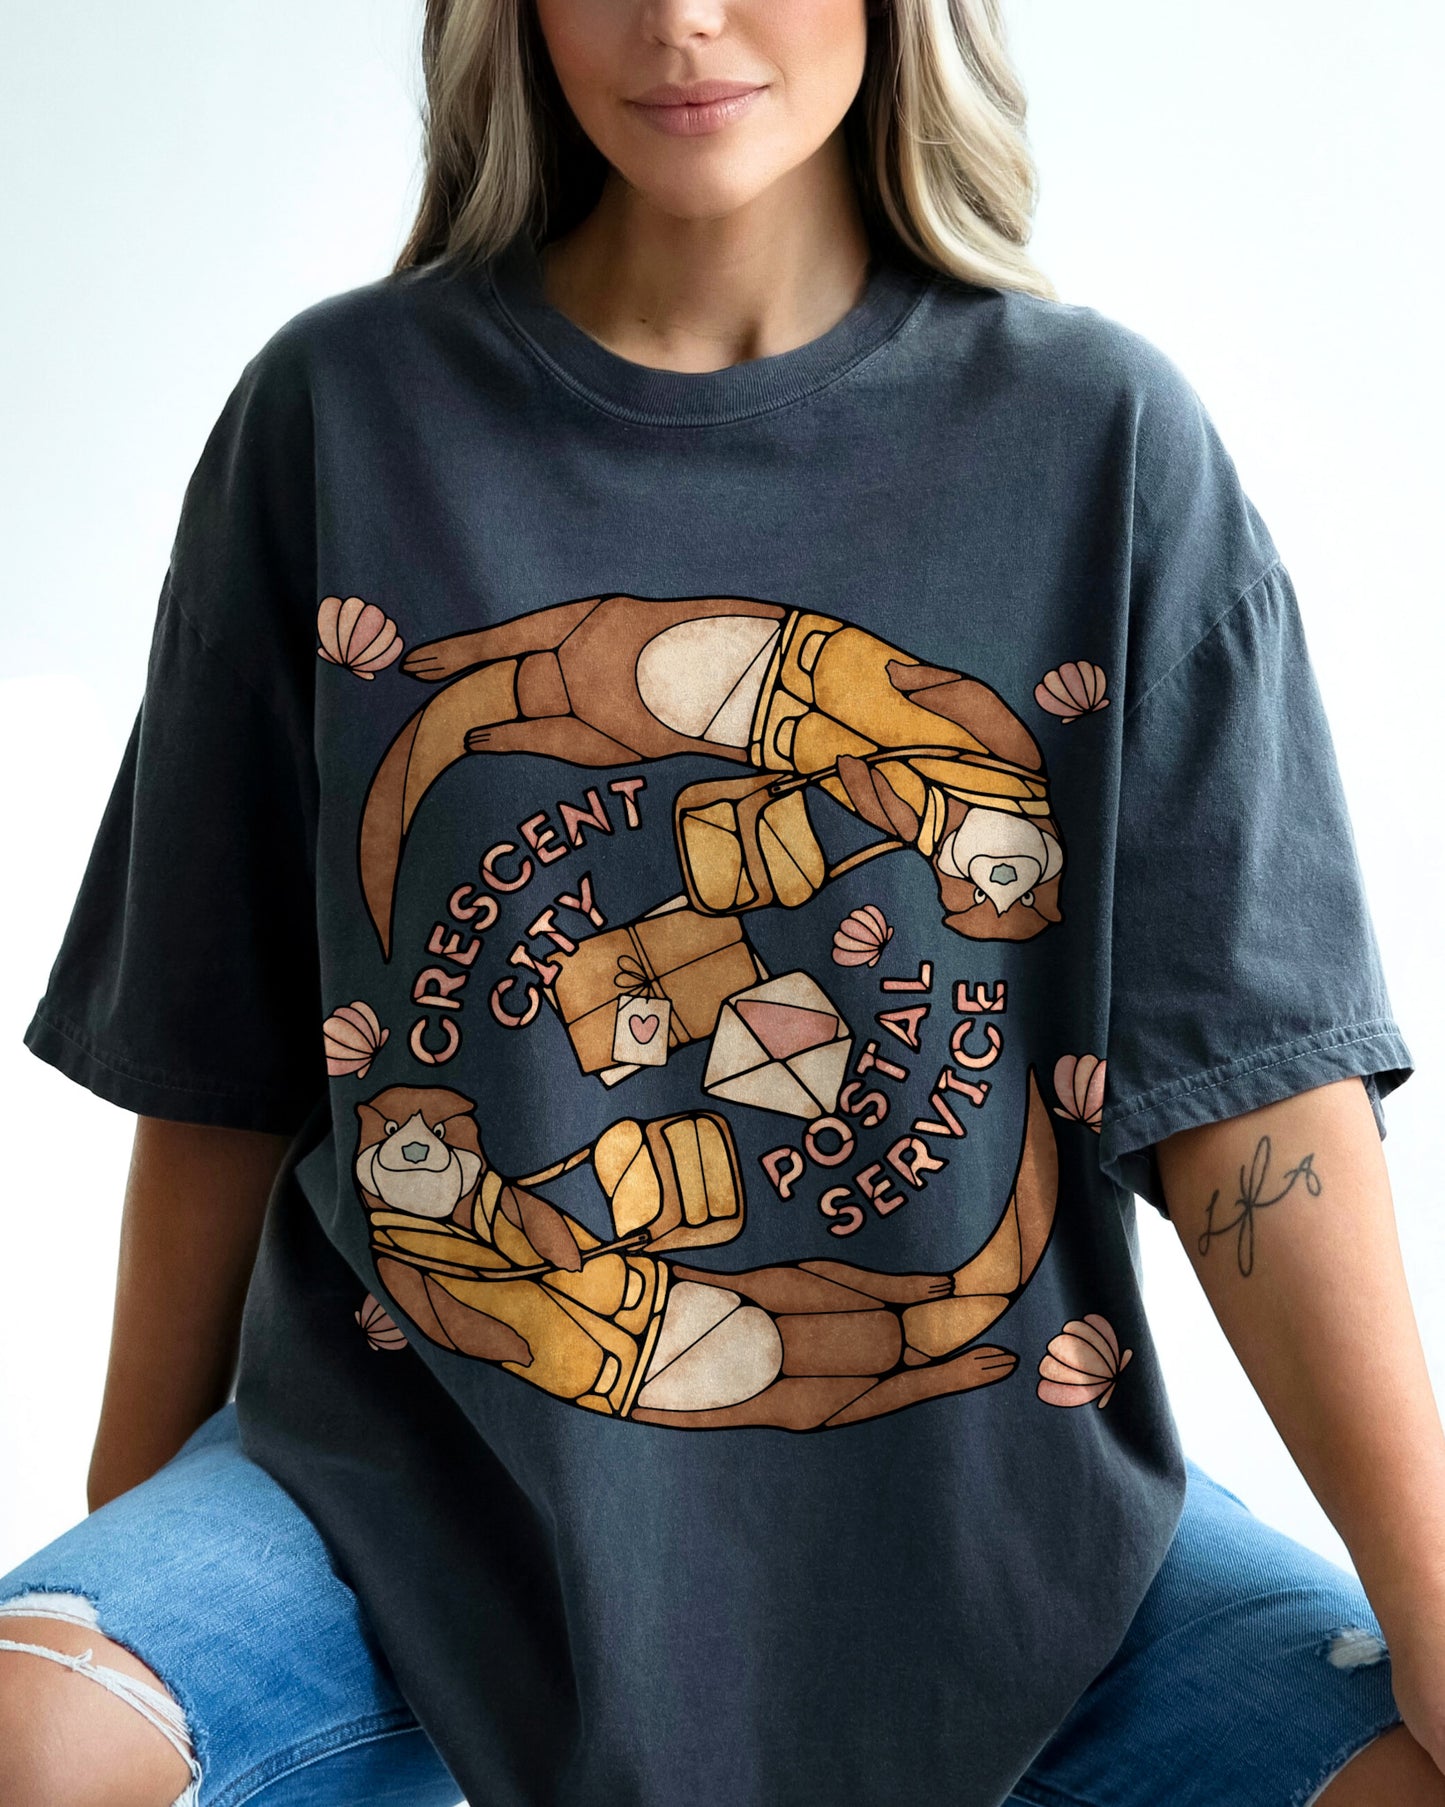 Crescent City Shirt - Postal Service Otters - Bookish Tee